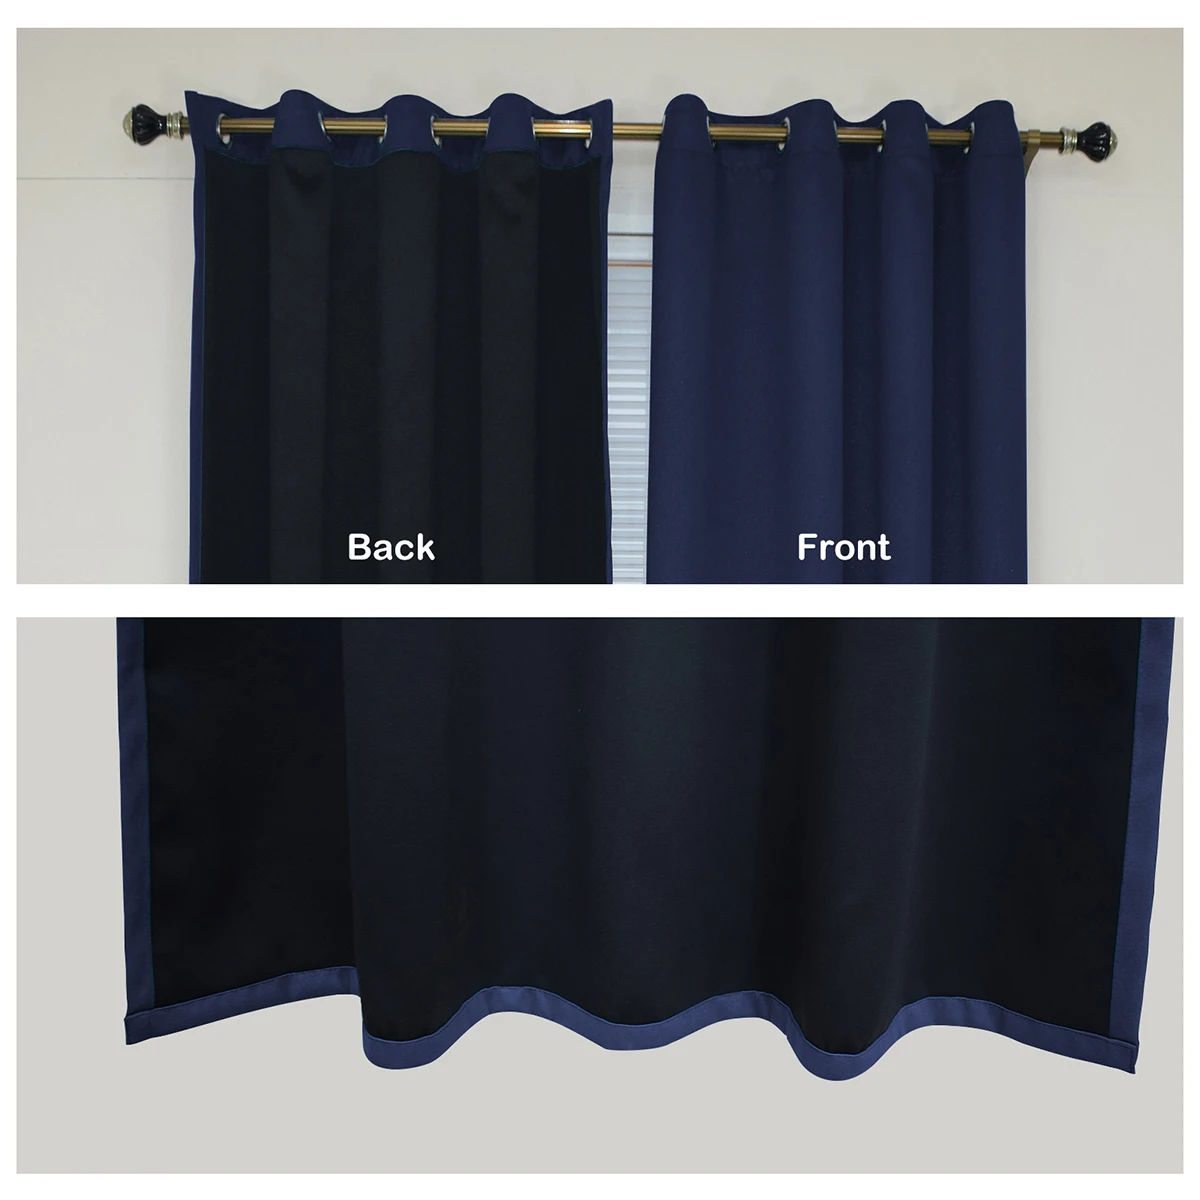 isolamento térmico cortinas cortina da janela blackout calor painel de luz completa bloqueio para sala estar quarto cortinas brancas